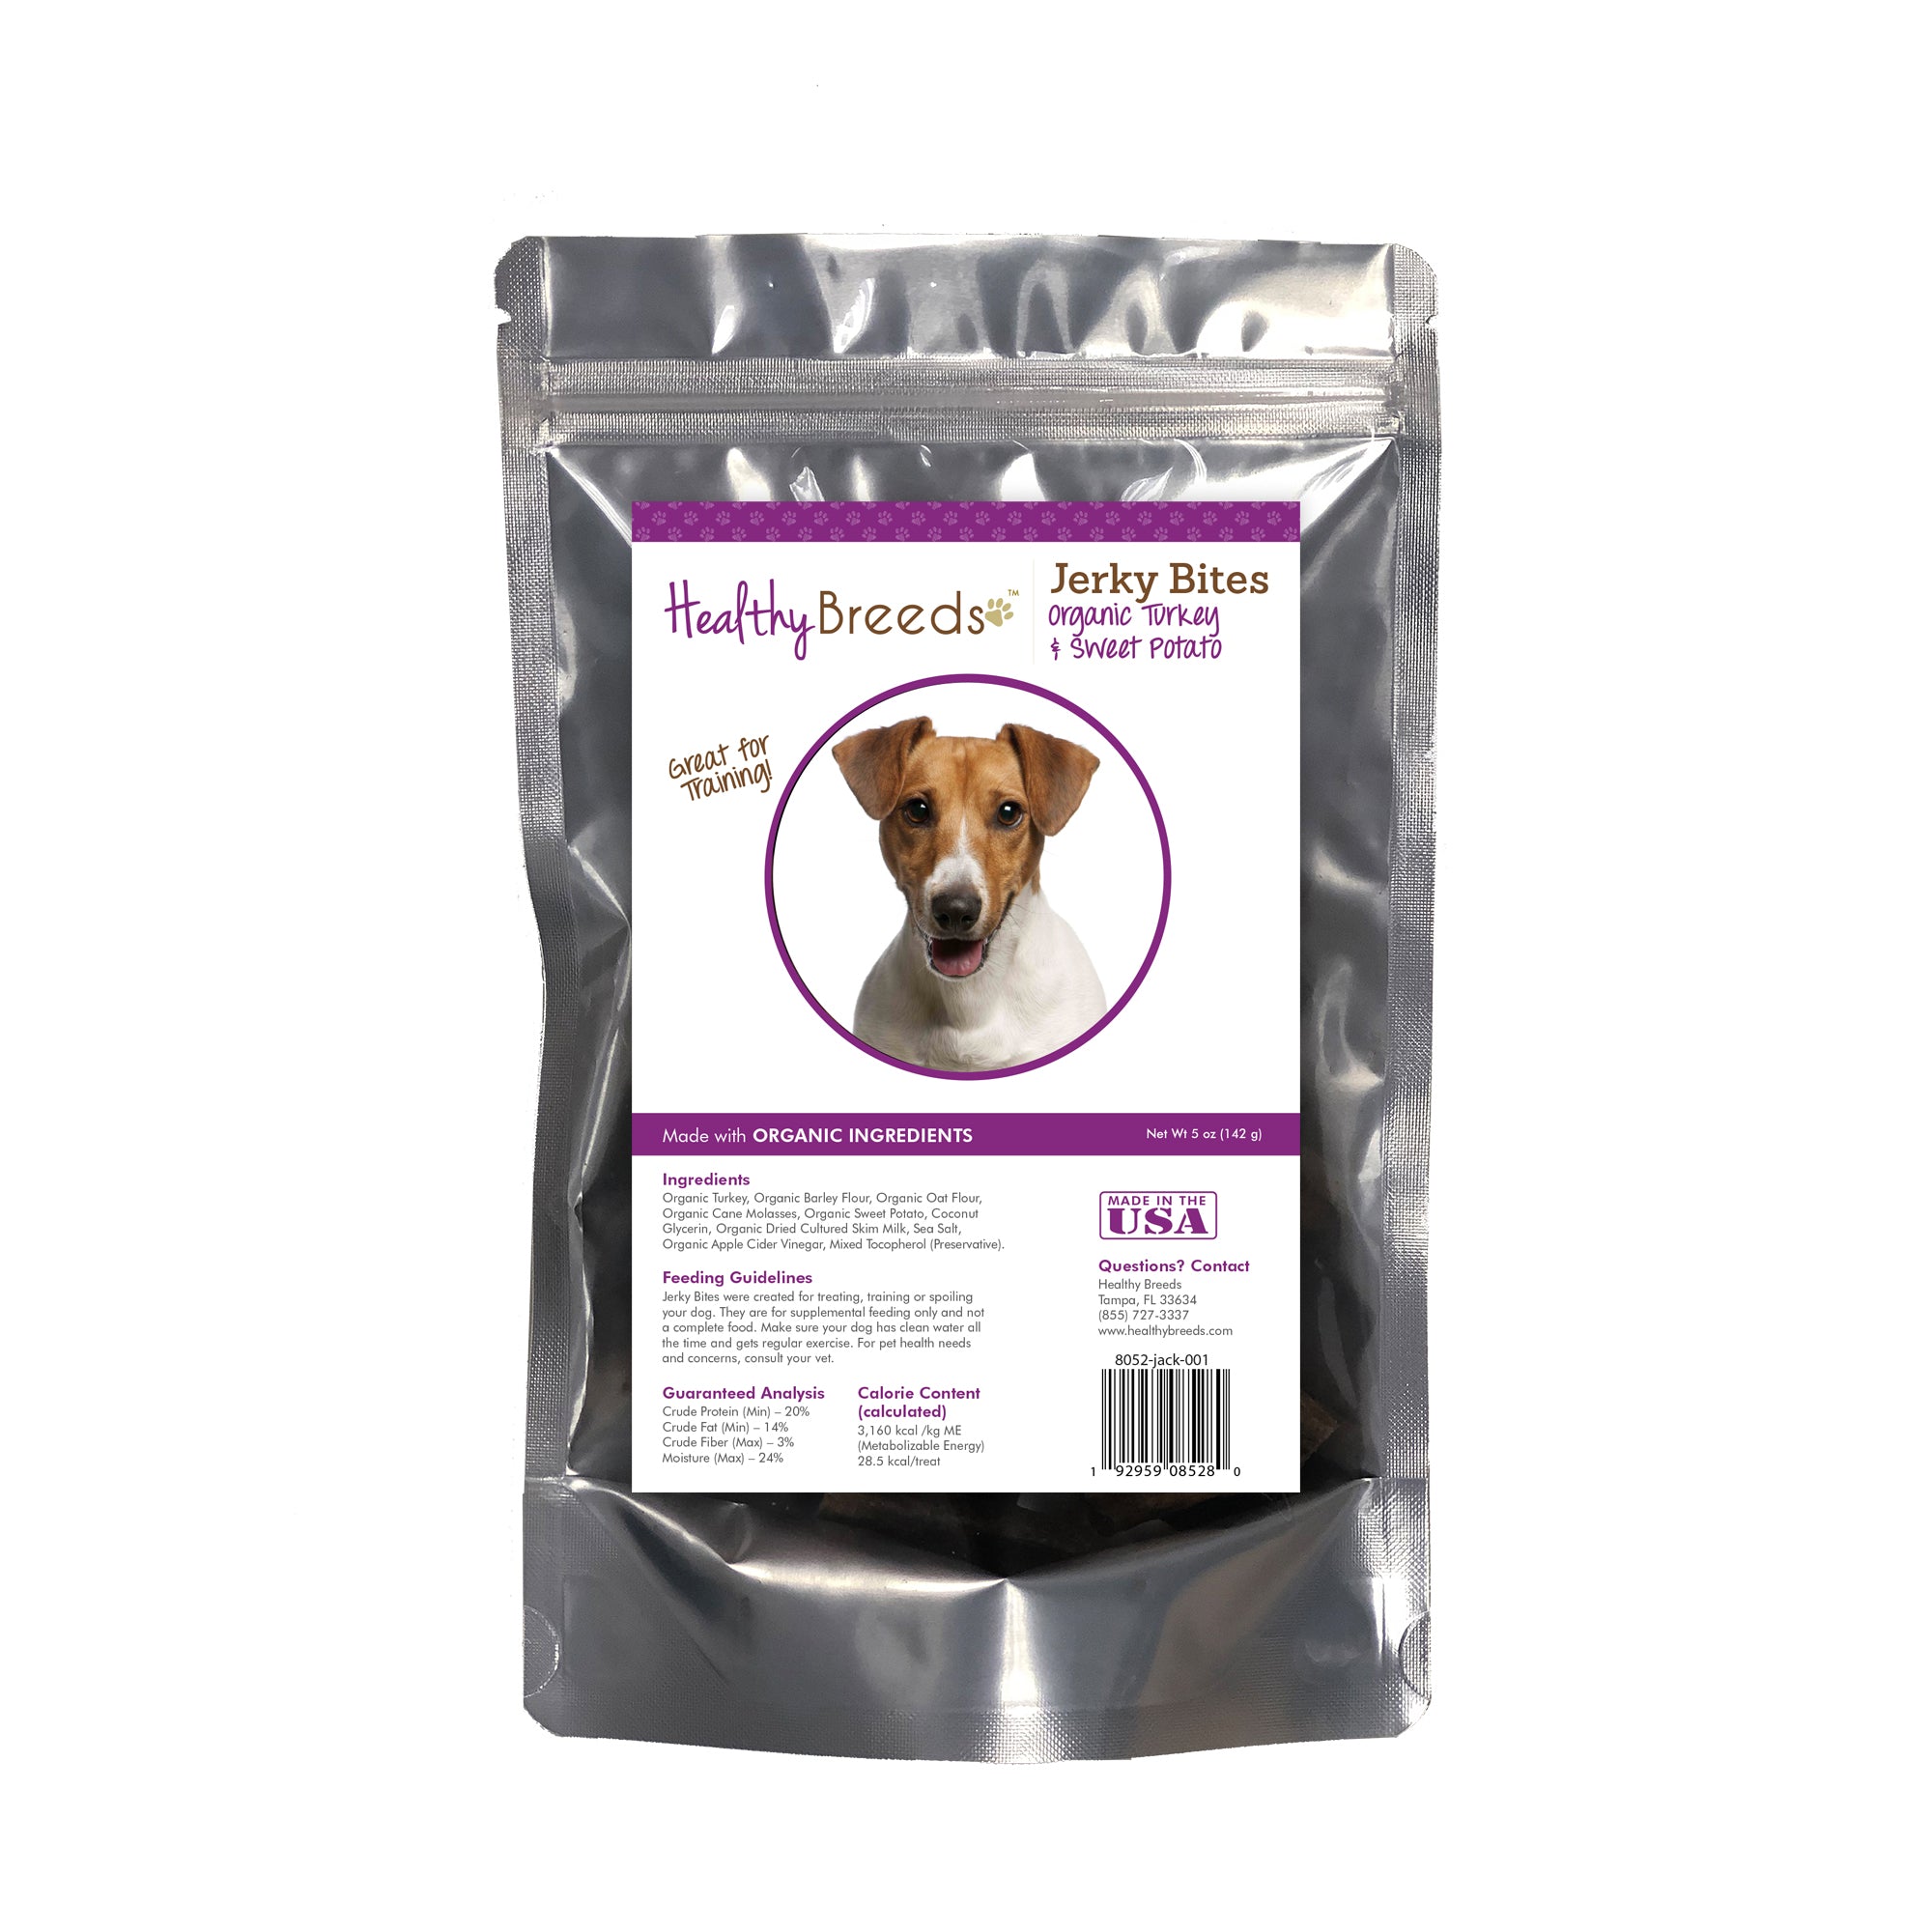 Healthy Breeds Jerky Bites Turkey & Sweet Potato Dog Treats - Jack Russell Terrier